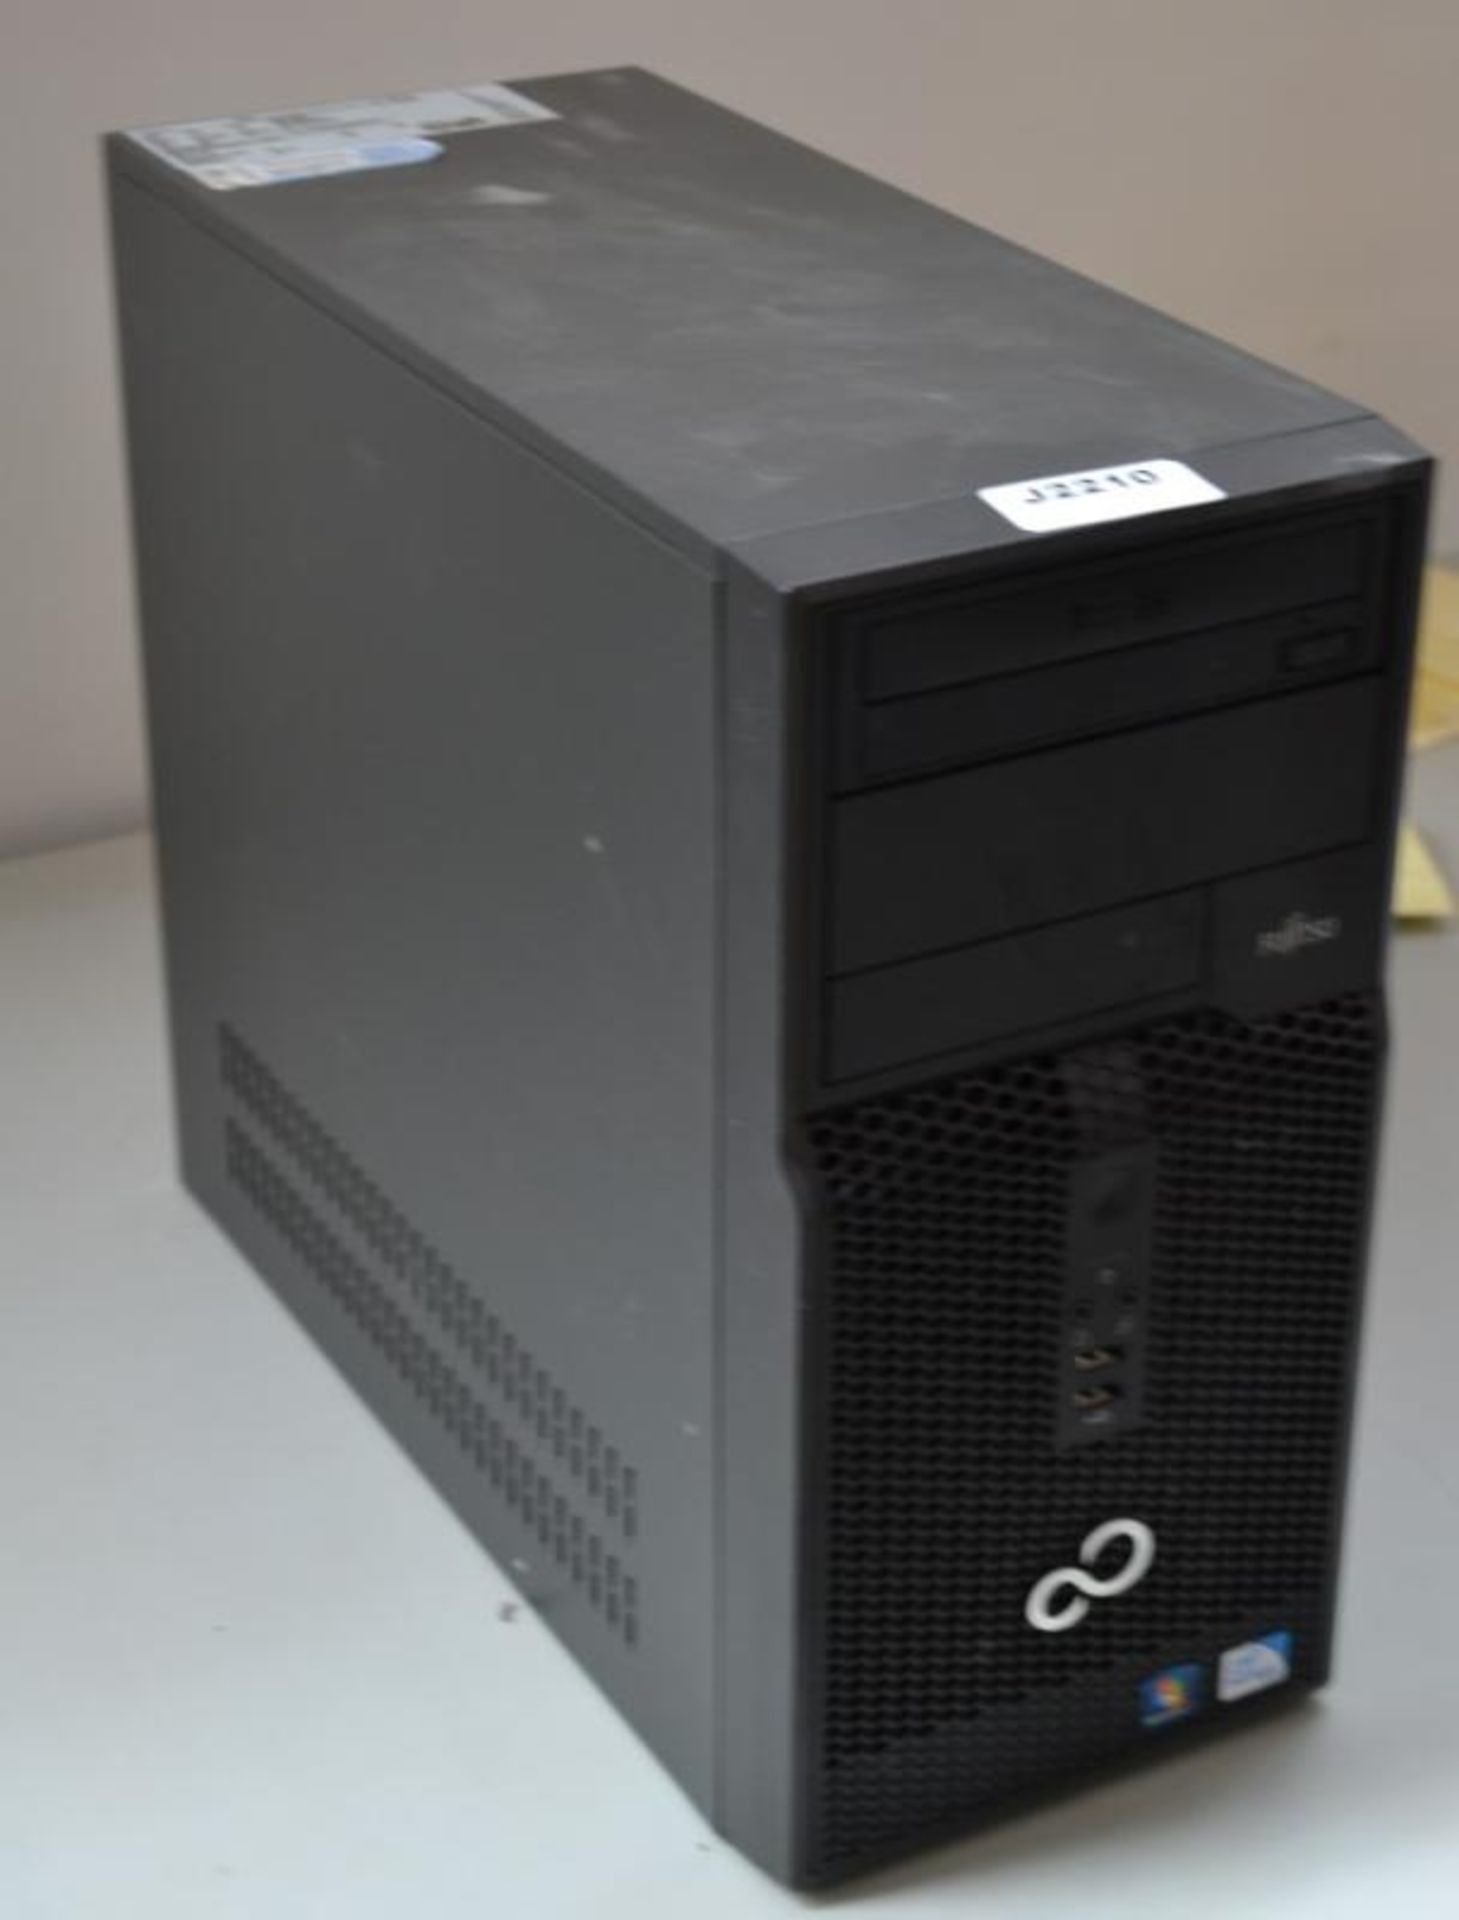 1 x FUJITSU ESPRIMO P400 DESKTOP COMPUTER INTEL PENTIUM 3.20 GHZ 4GB RAM Hard Drive Not included - R - Image 4 of 4